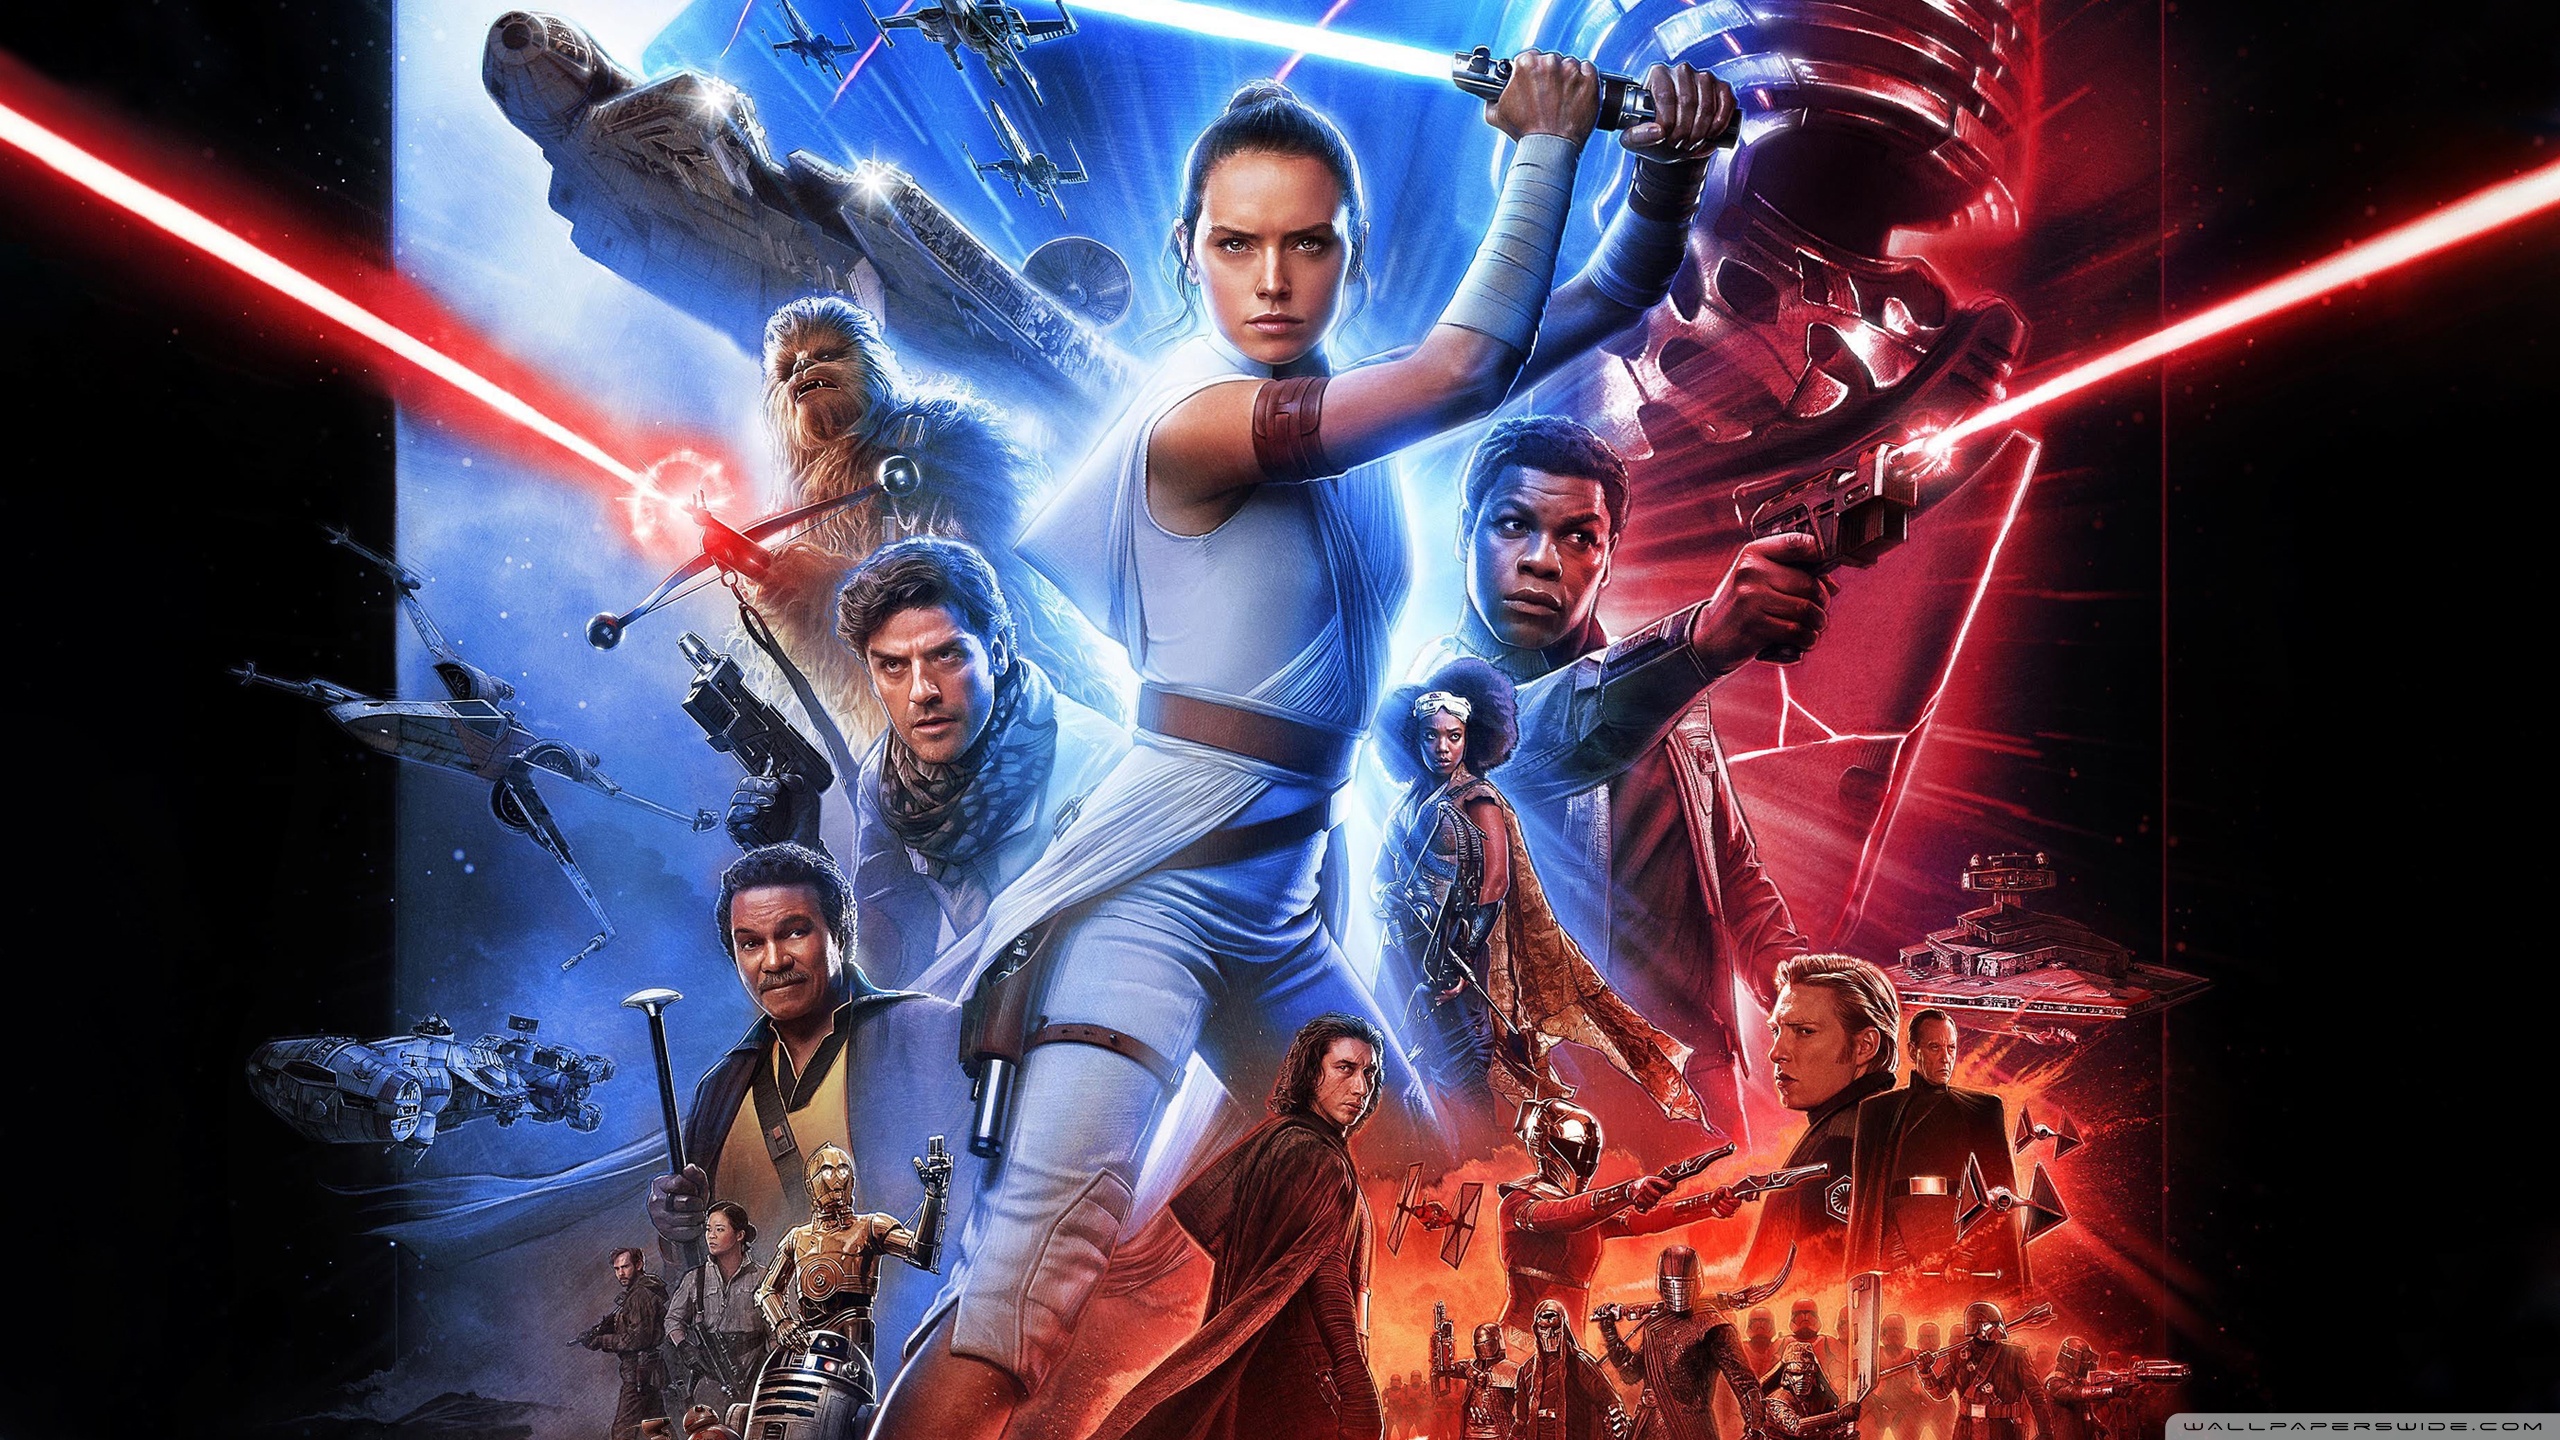 1440p Star Wars Wallpaper Rise Of Skywalker